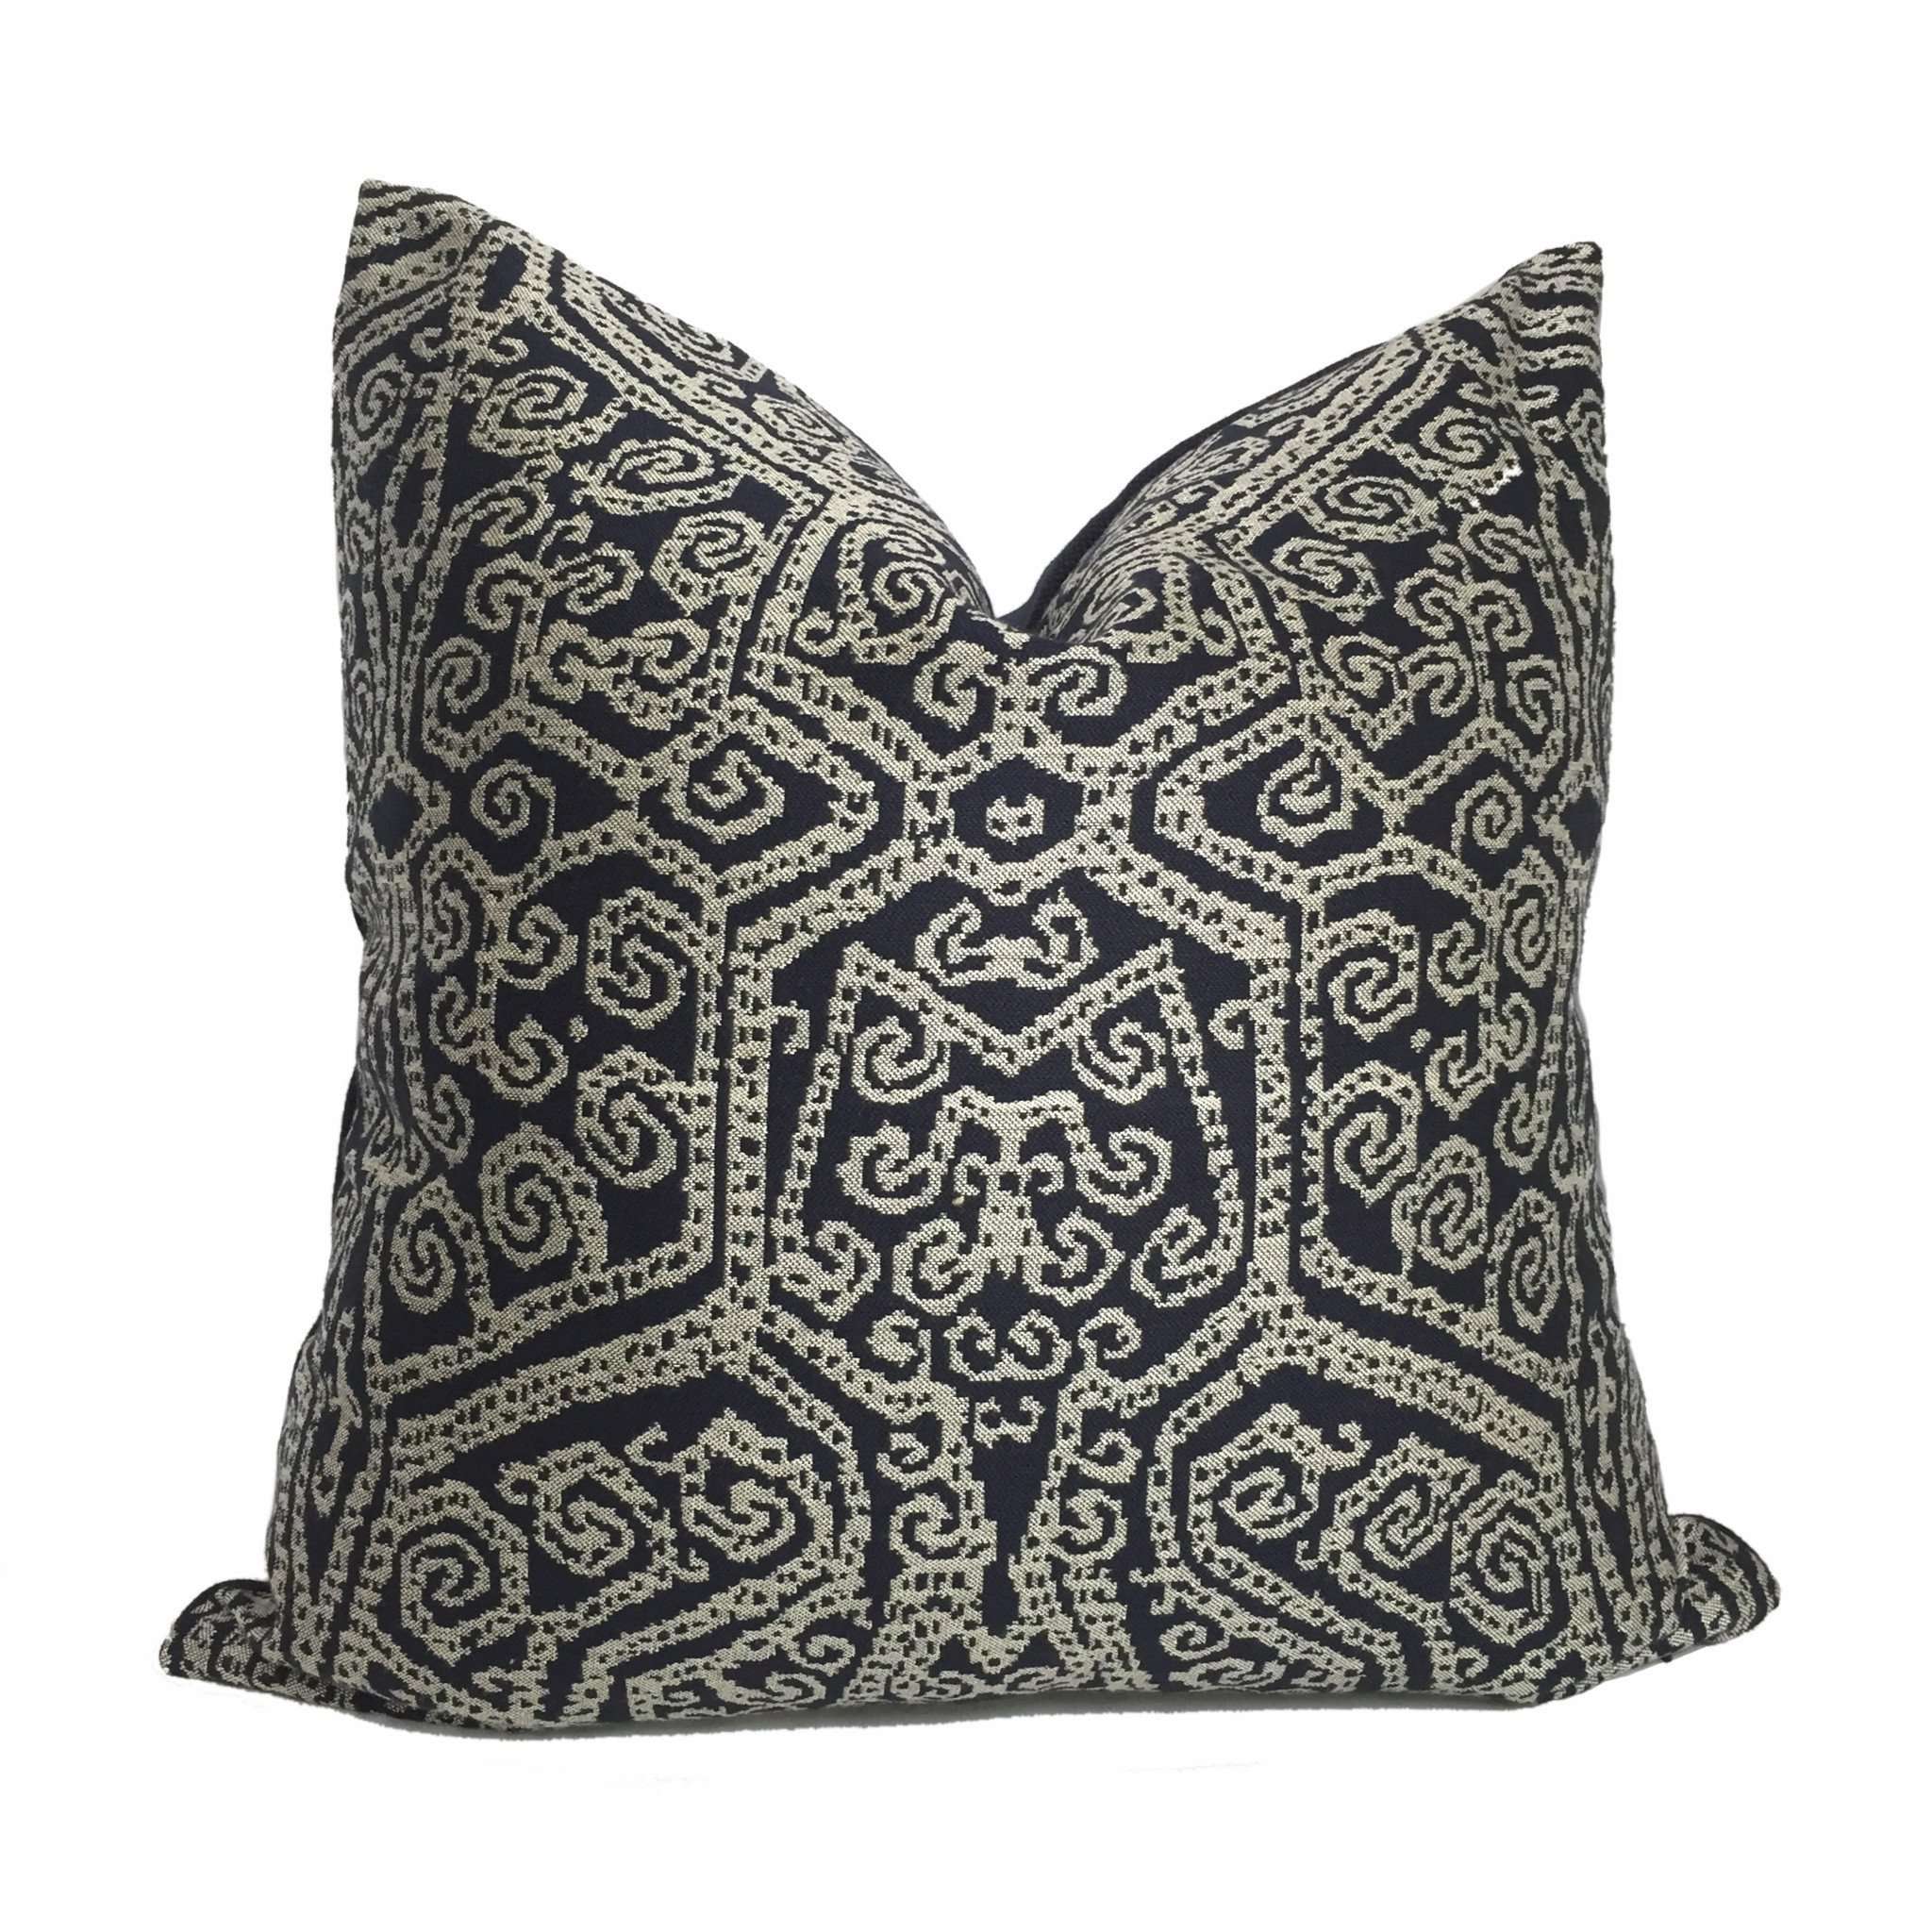 Robert Allen Lady Tara Navy Blue Beige Ethnic Motif Decorative Throw Pillow Cover by Aloriam